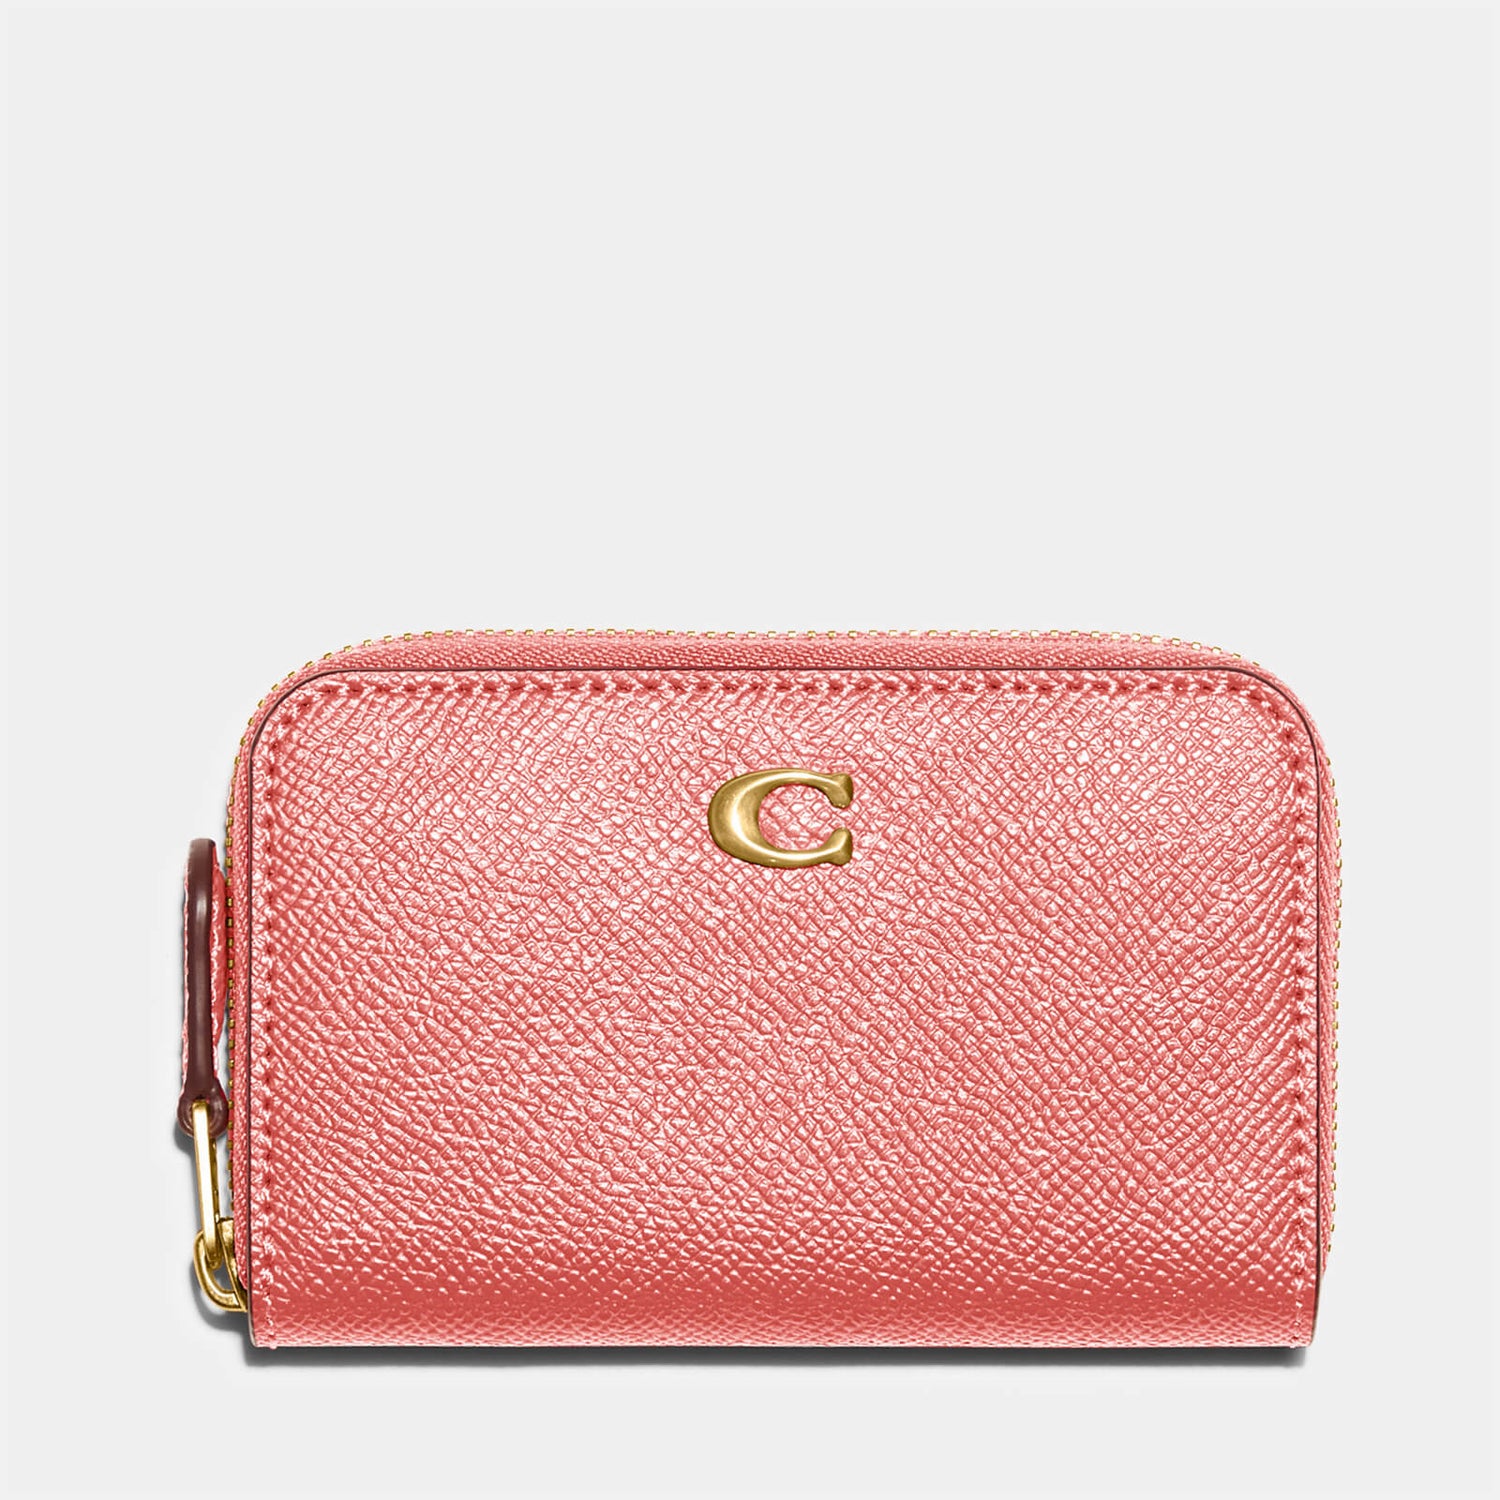 Coach Women's Crossgrain Leather Zip Around Card Case - Candy Pink